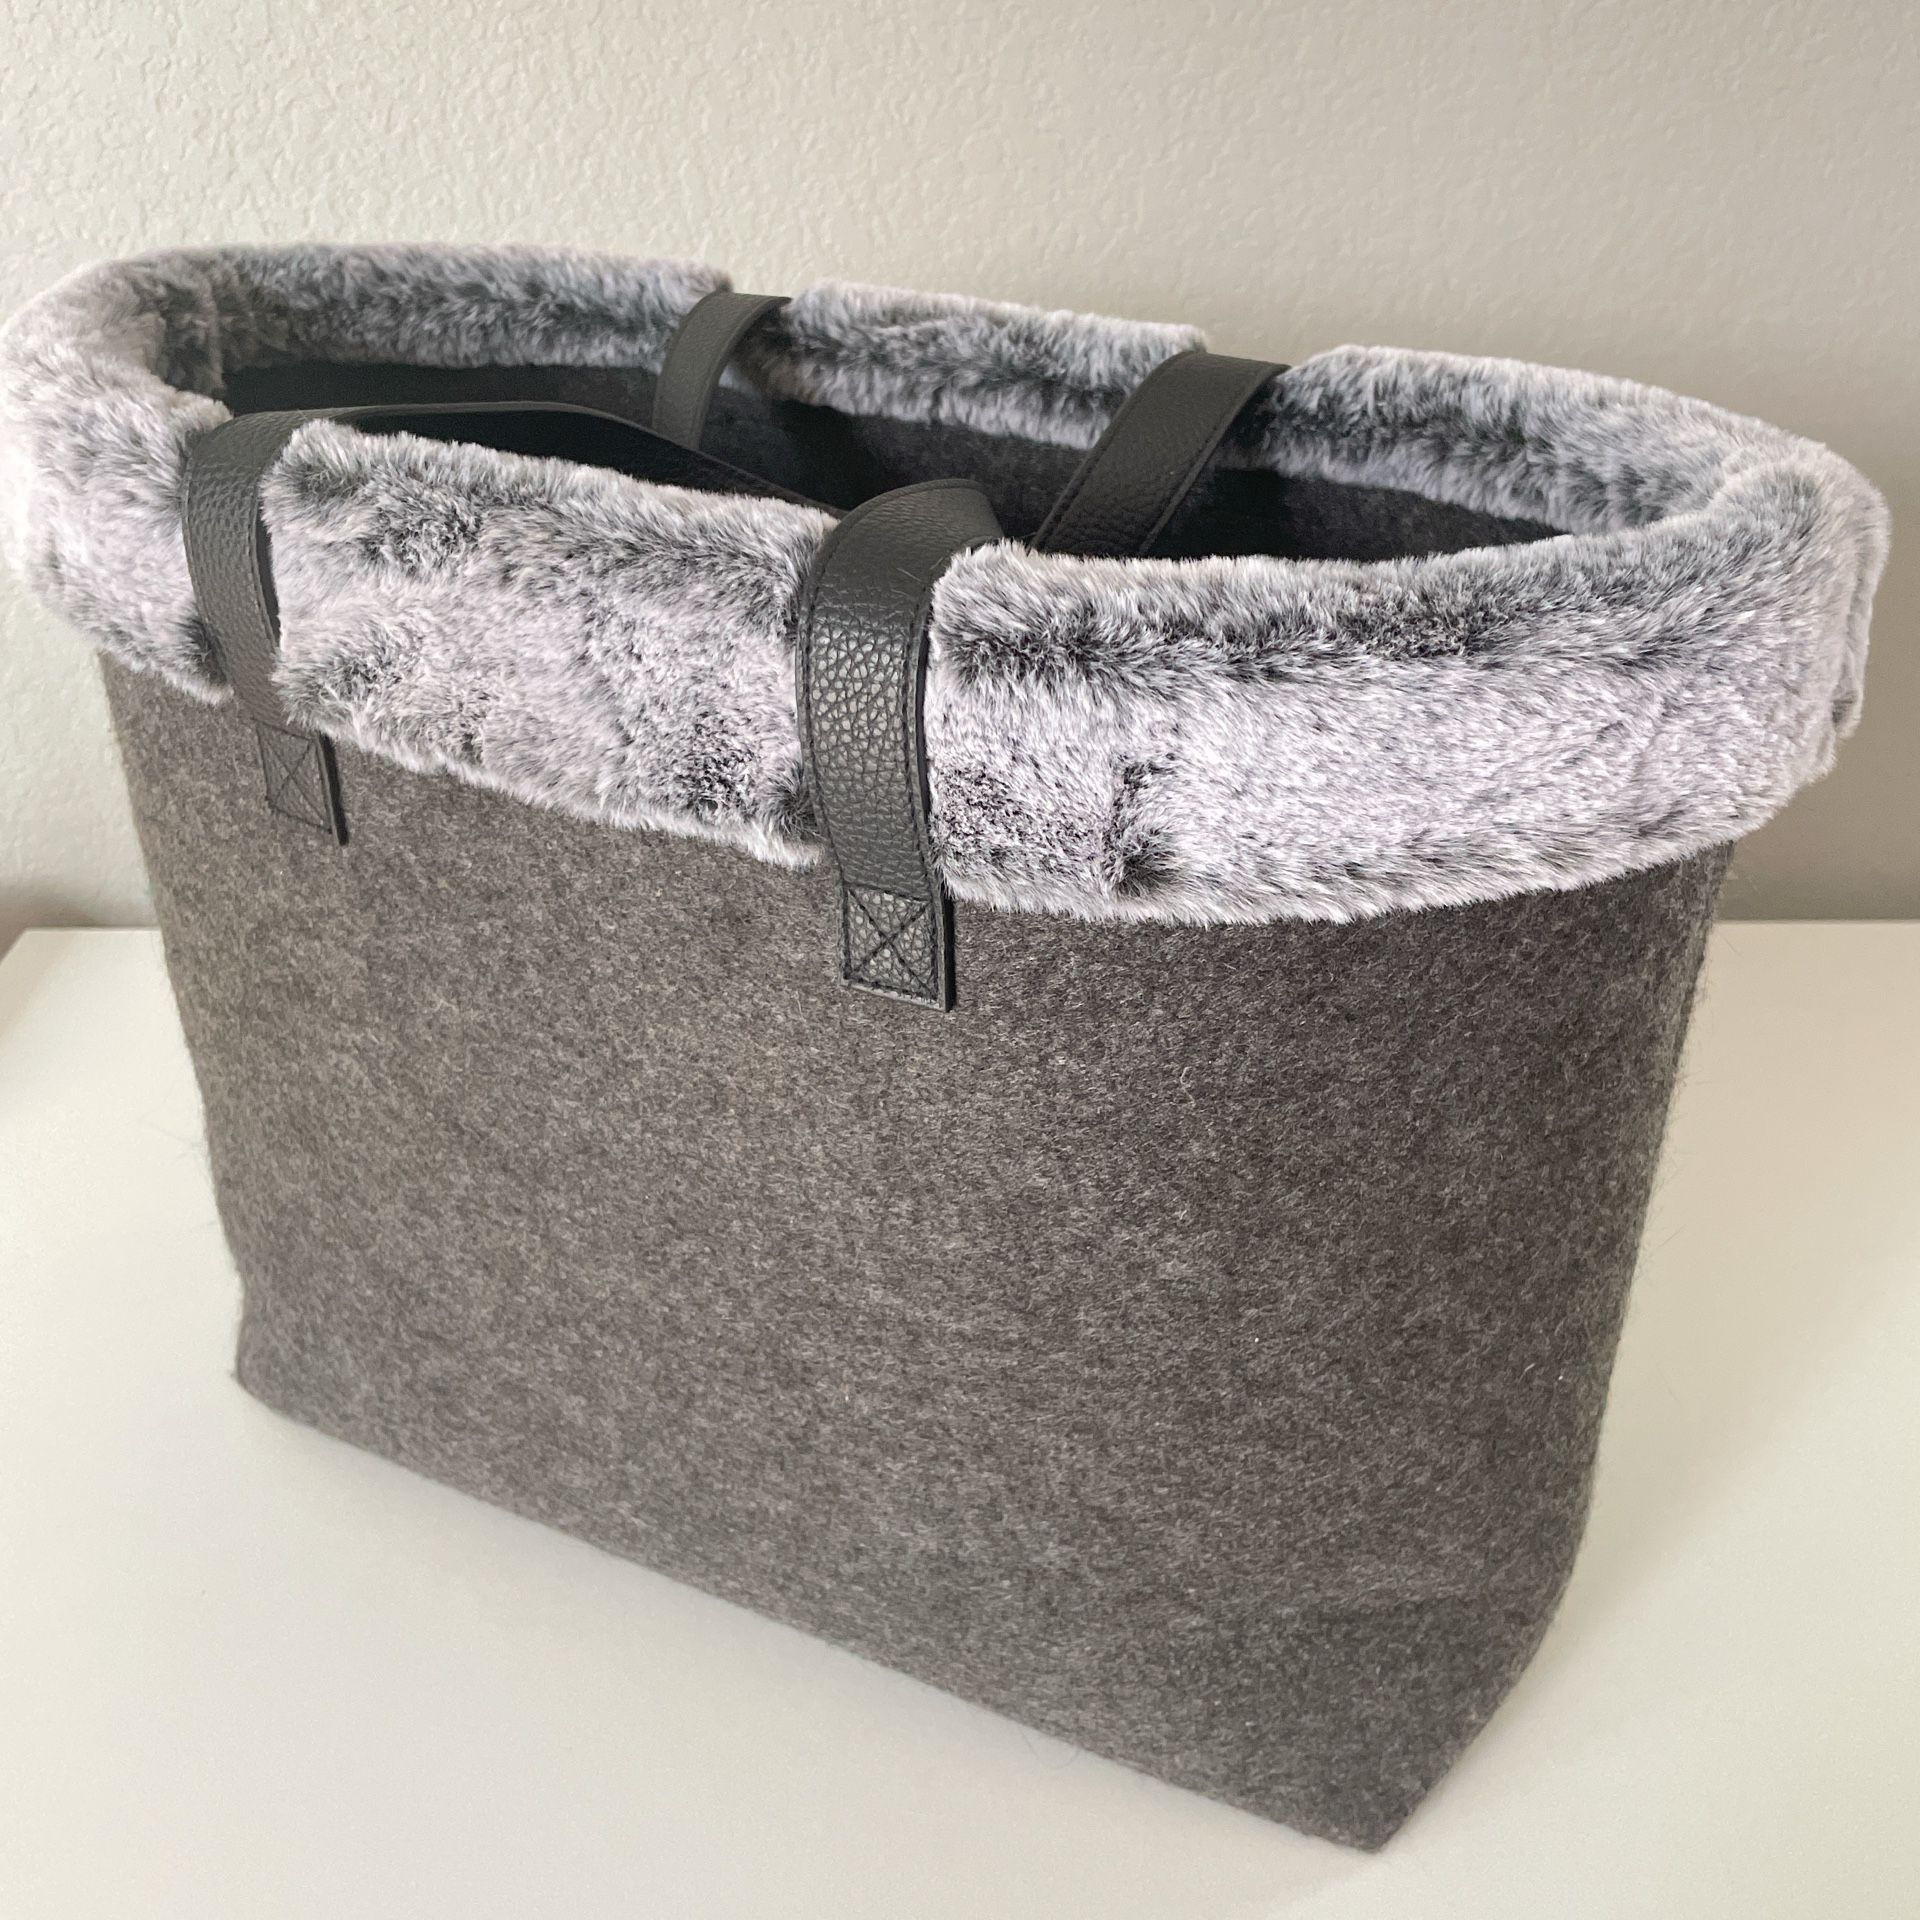 BARNES & NOBLE Large Tote Bag Gray Felt w/Faux Fur Trim Holiday Carry Book Bag